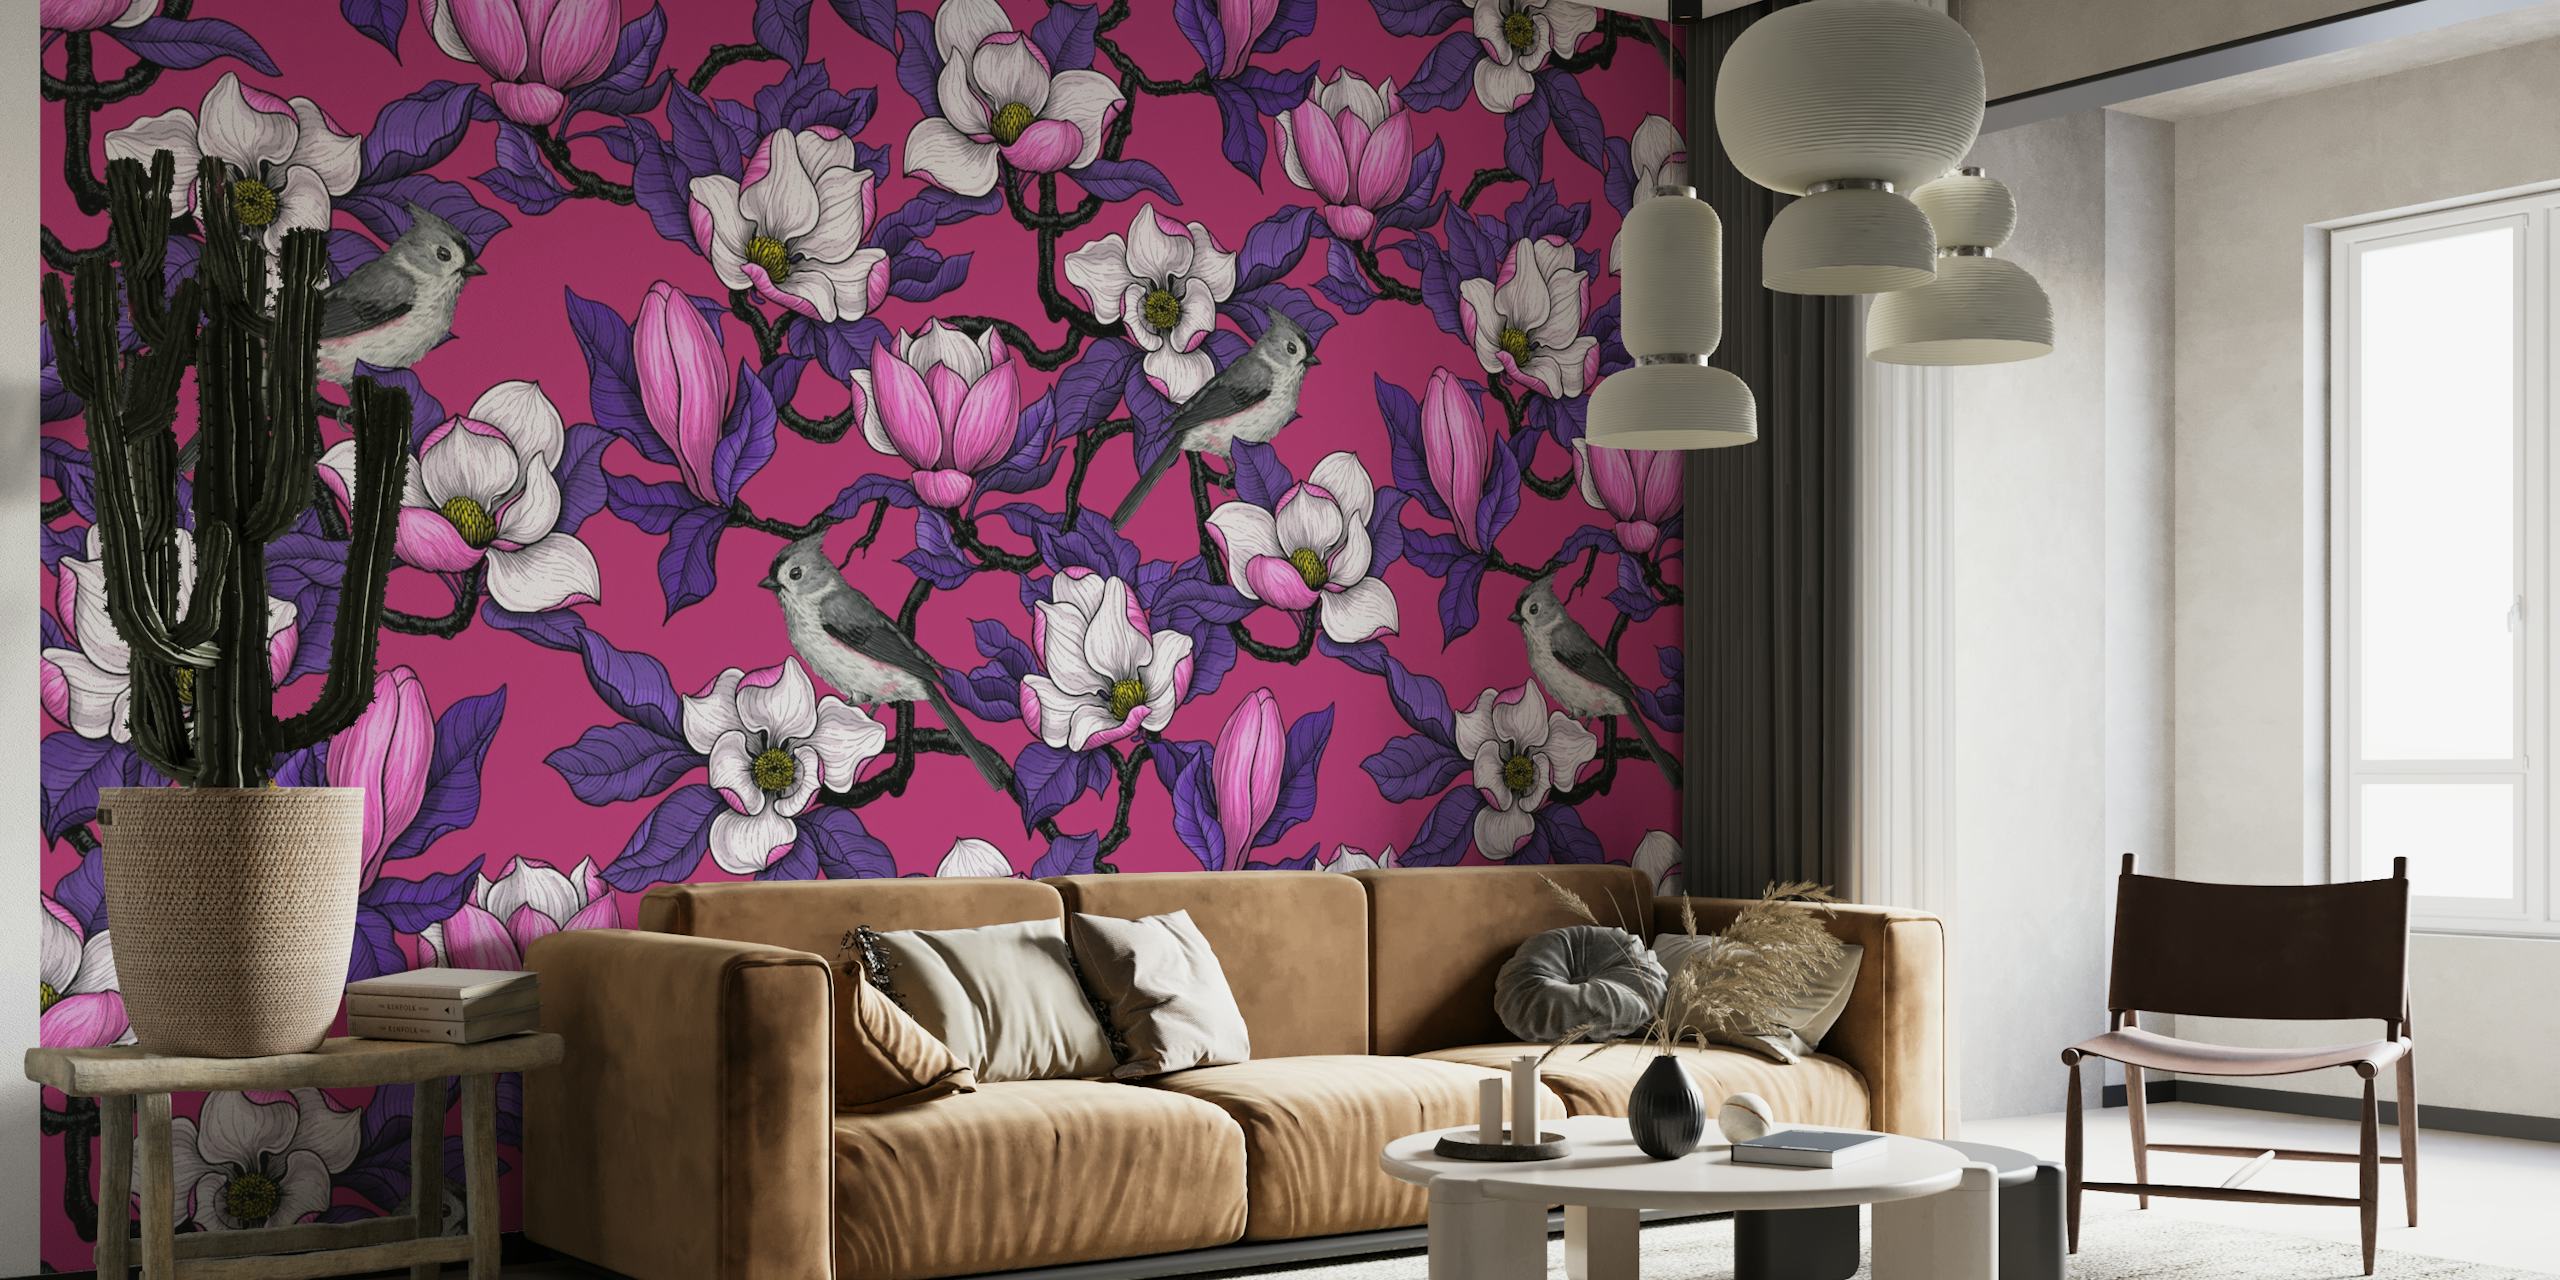 Blooming magnolia and bird 7 wallpaper